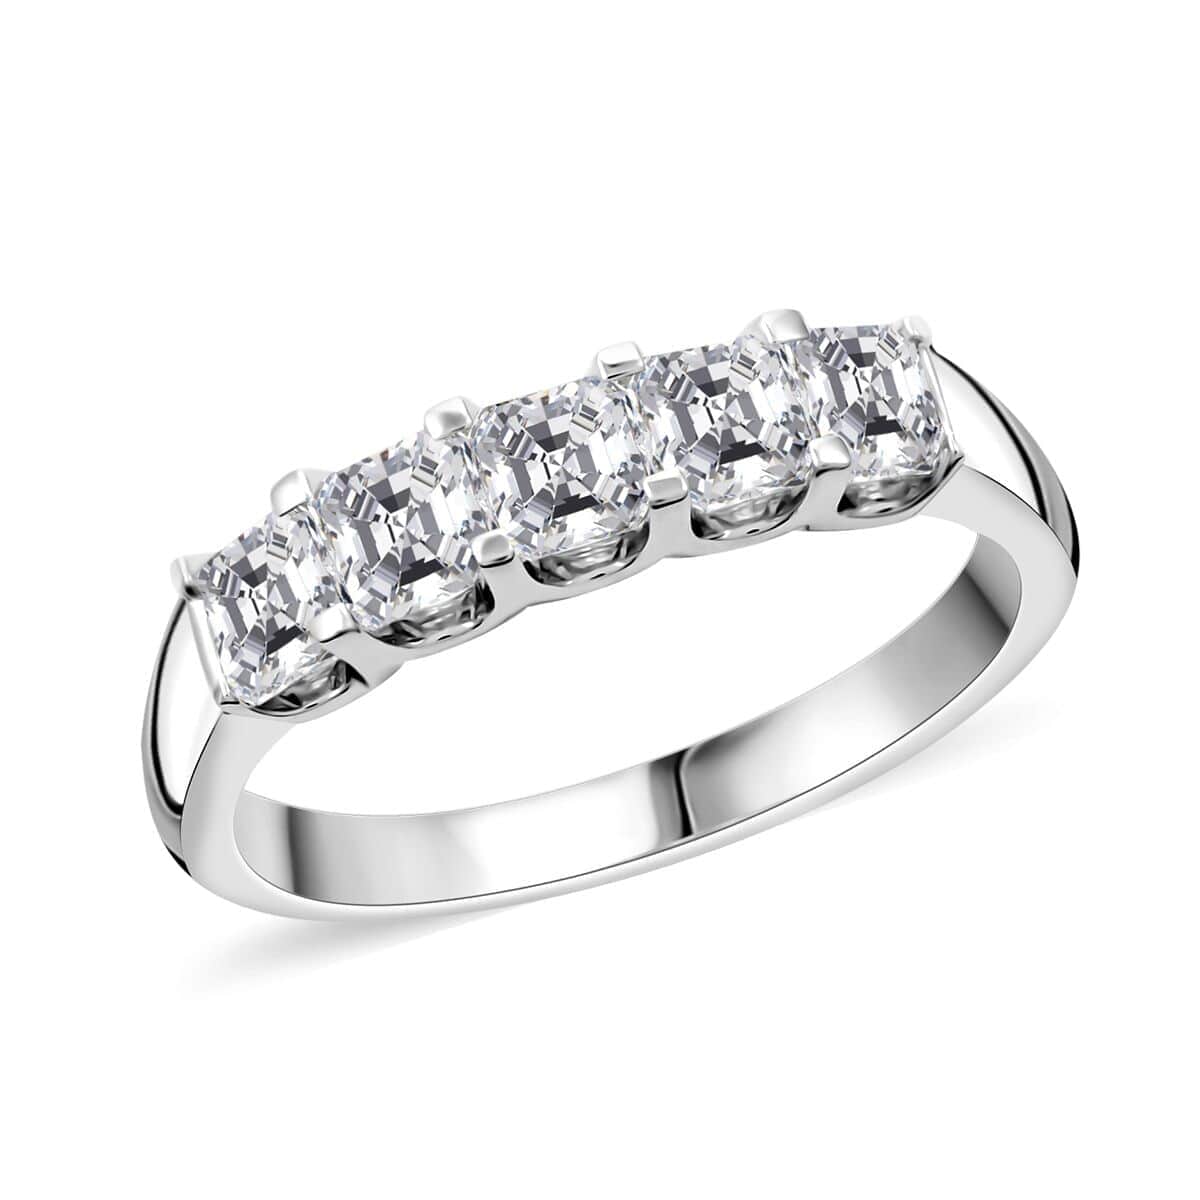 Modani 950 Platinum White Diamond (SI1) Ring 4.75 Grams 1.17 ctw image number 0